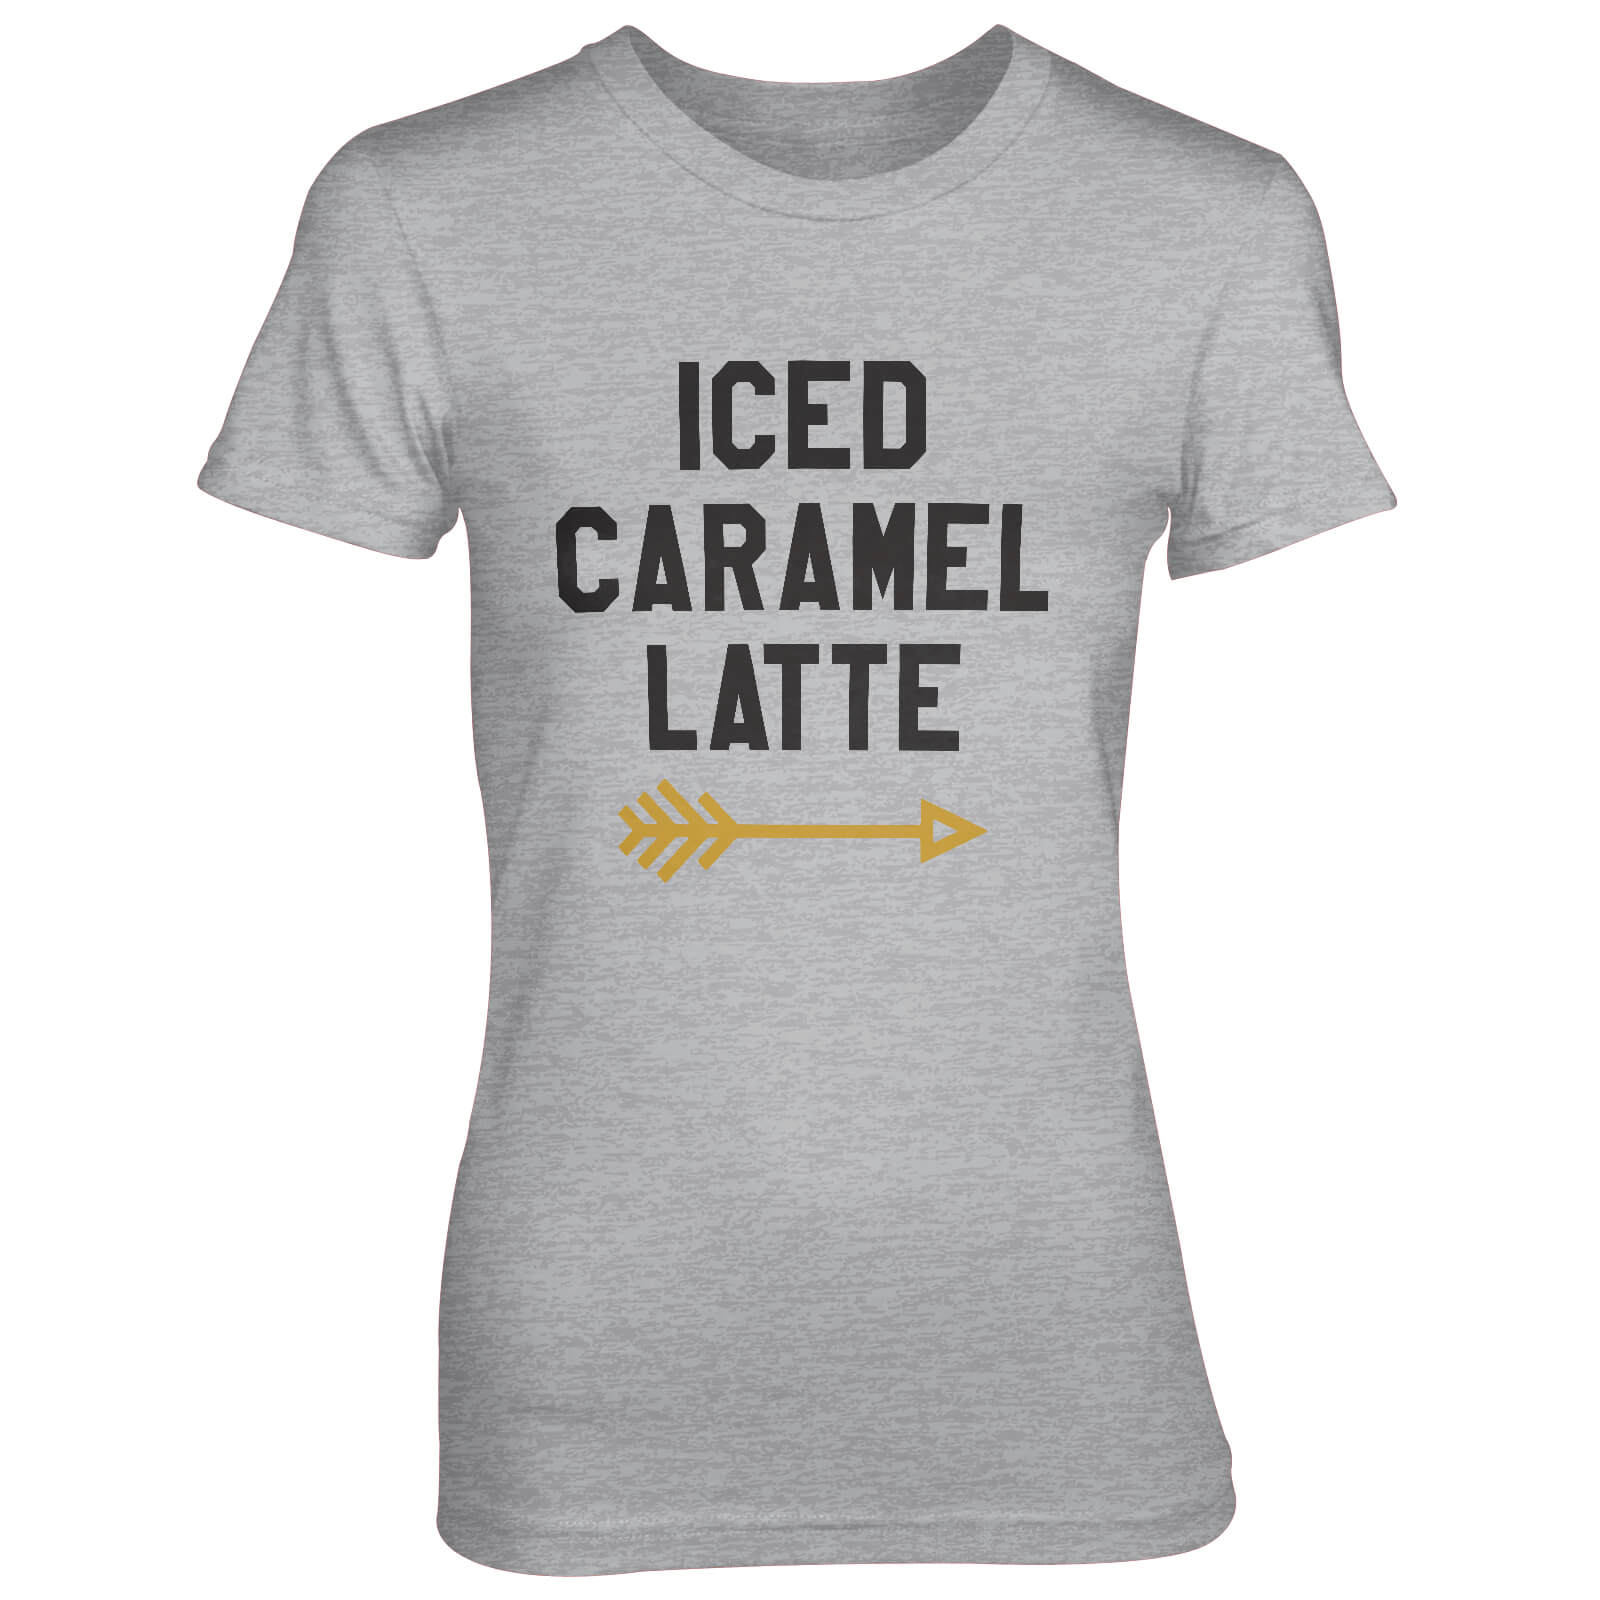 Iced Caramel Latte Women's Grey T-Shirt - S - Grey